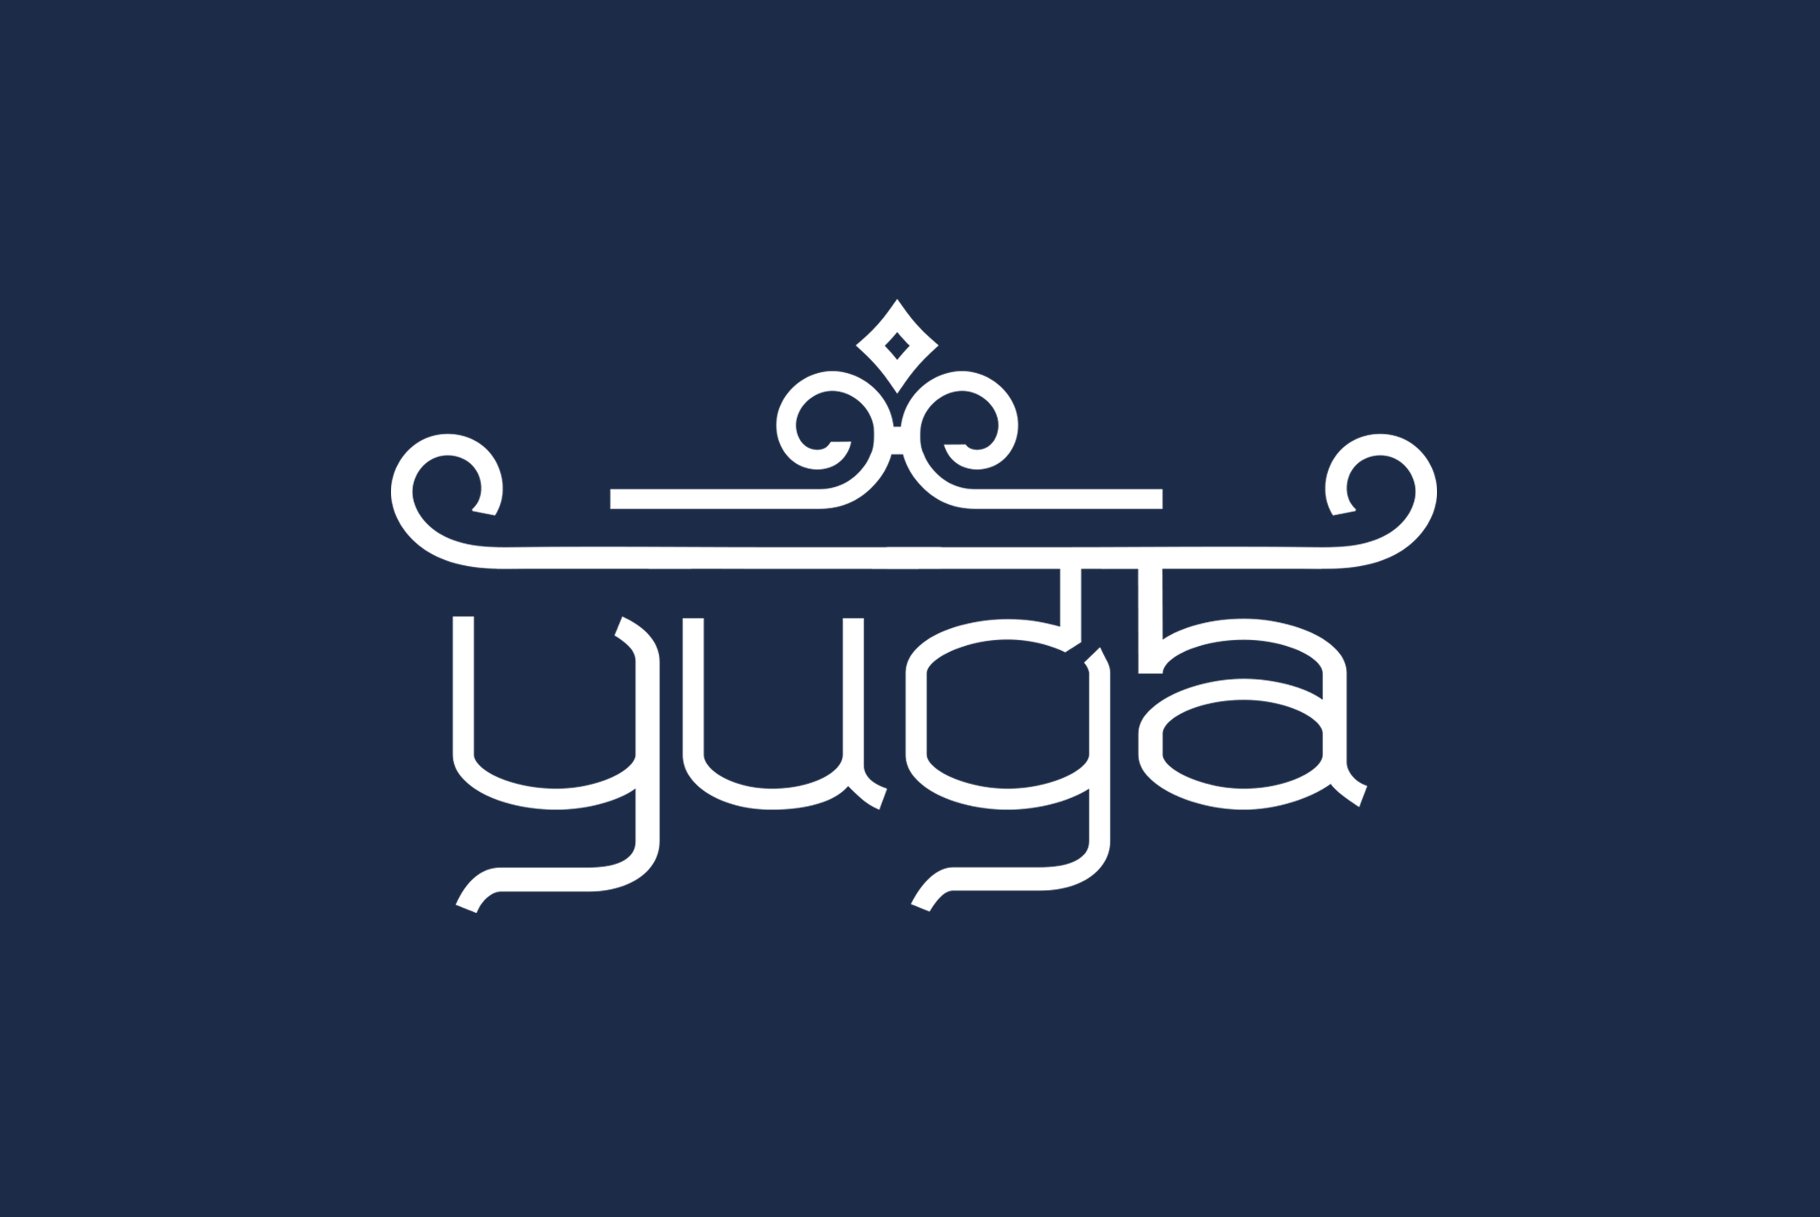 Yuga Sanskrit - English Font cover image.